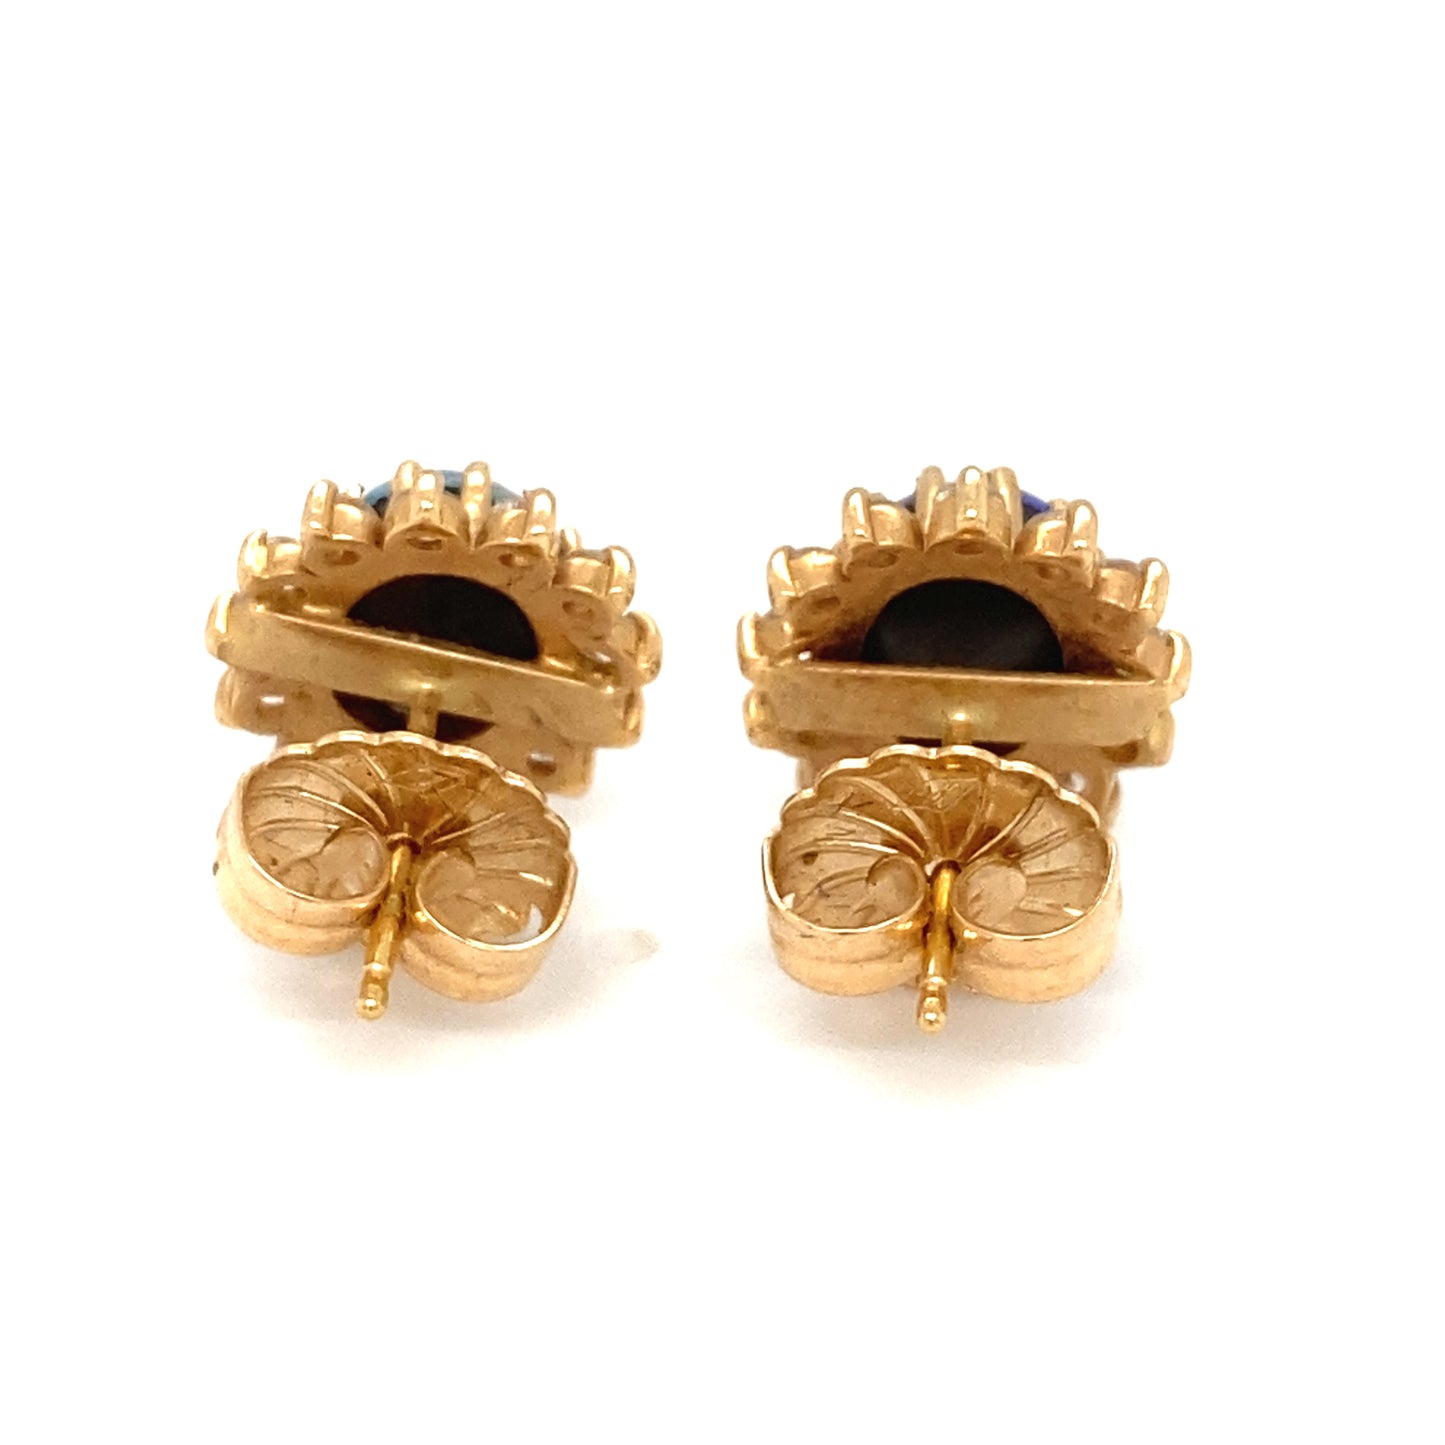 Circa 2000s Opal Doublet Stud Earrings with Diamonds in 14K Gold